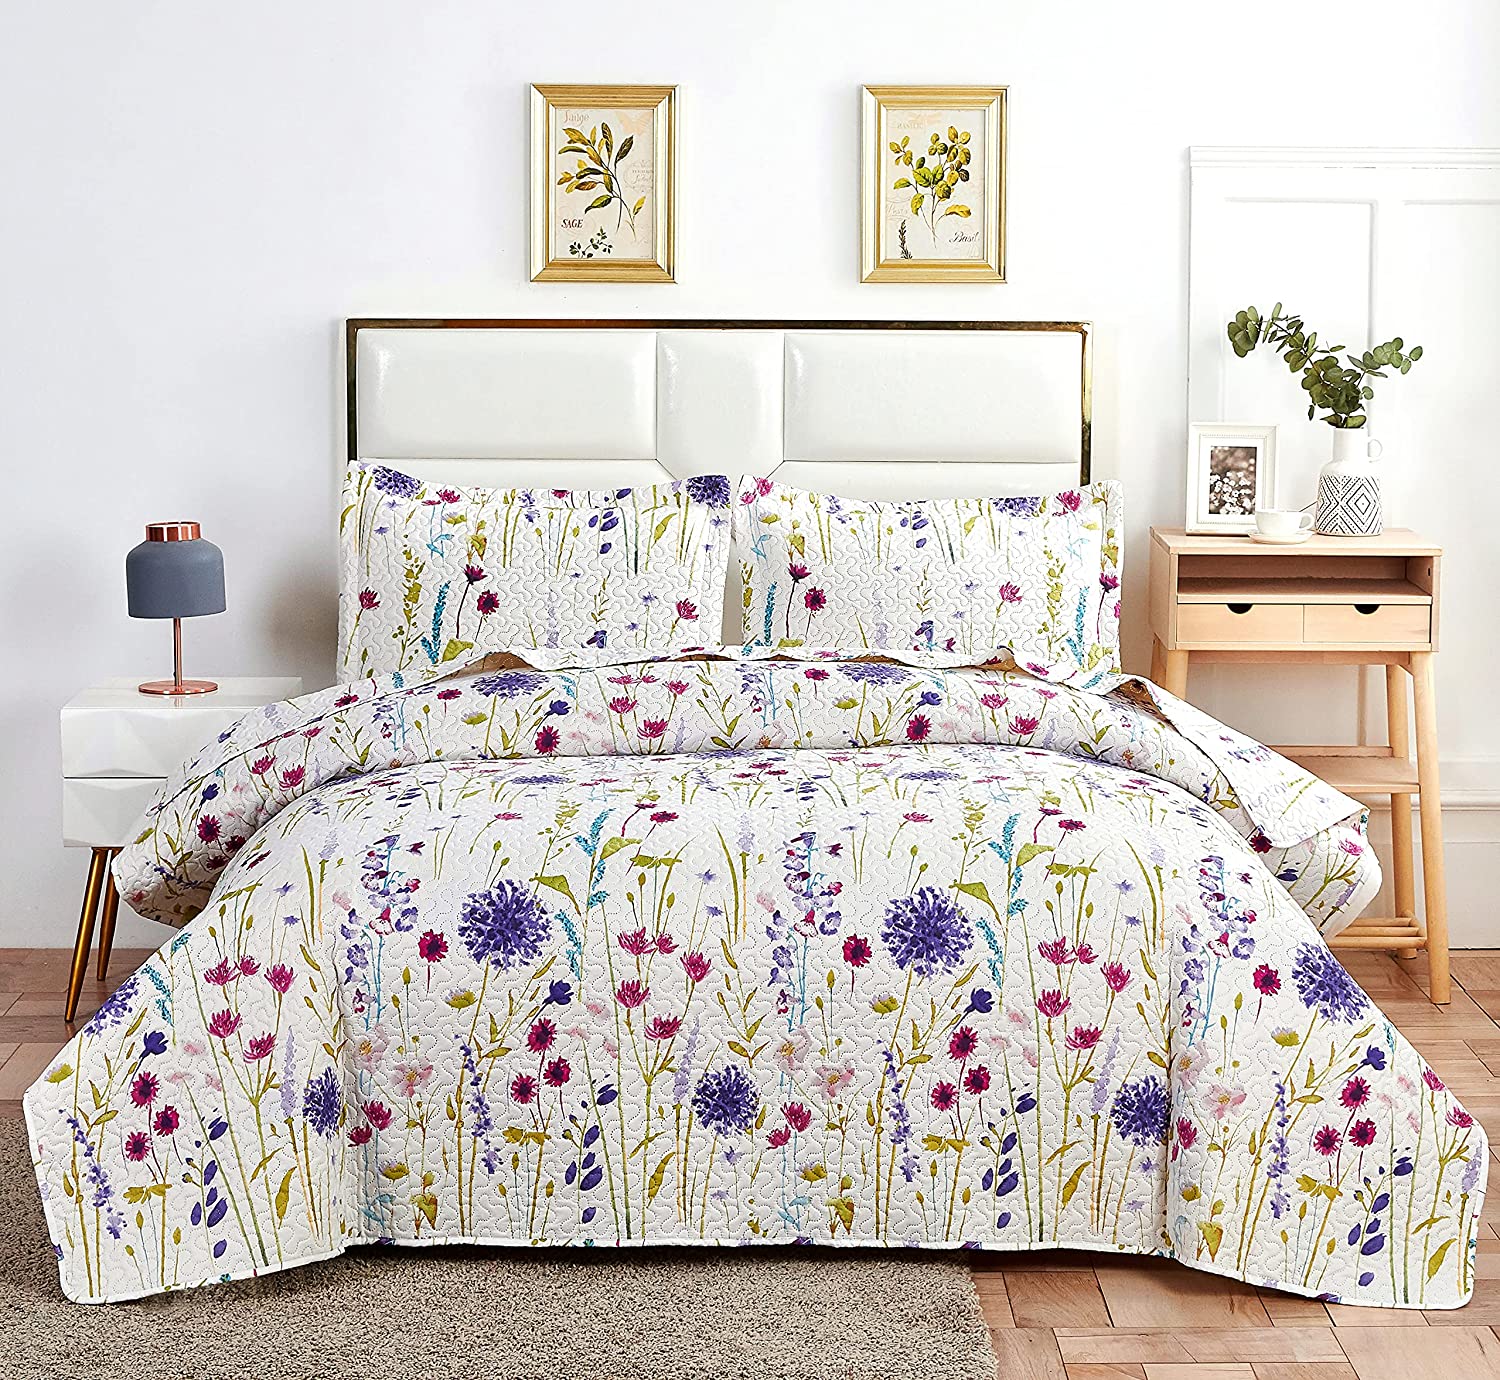 Bedspread Blooming Floral  3-Piece Reversible Bedding Quilt Set 